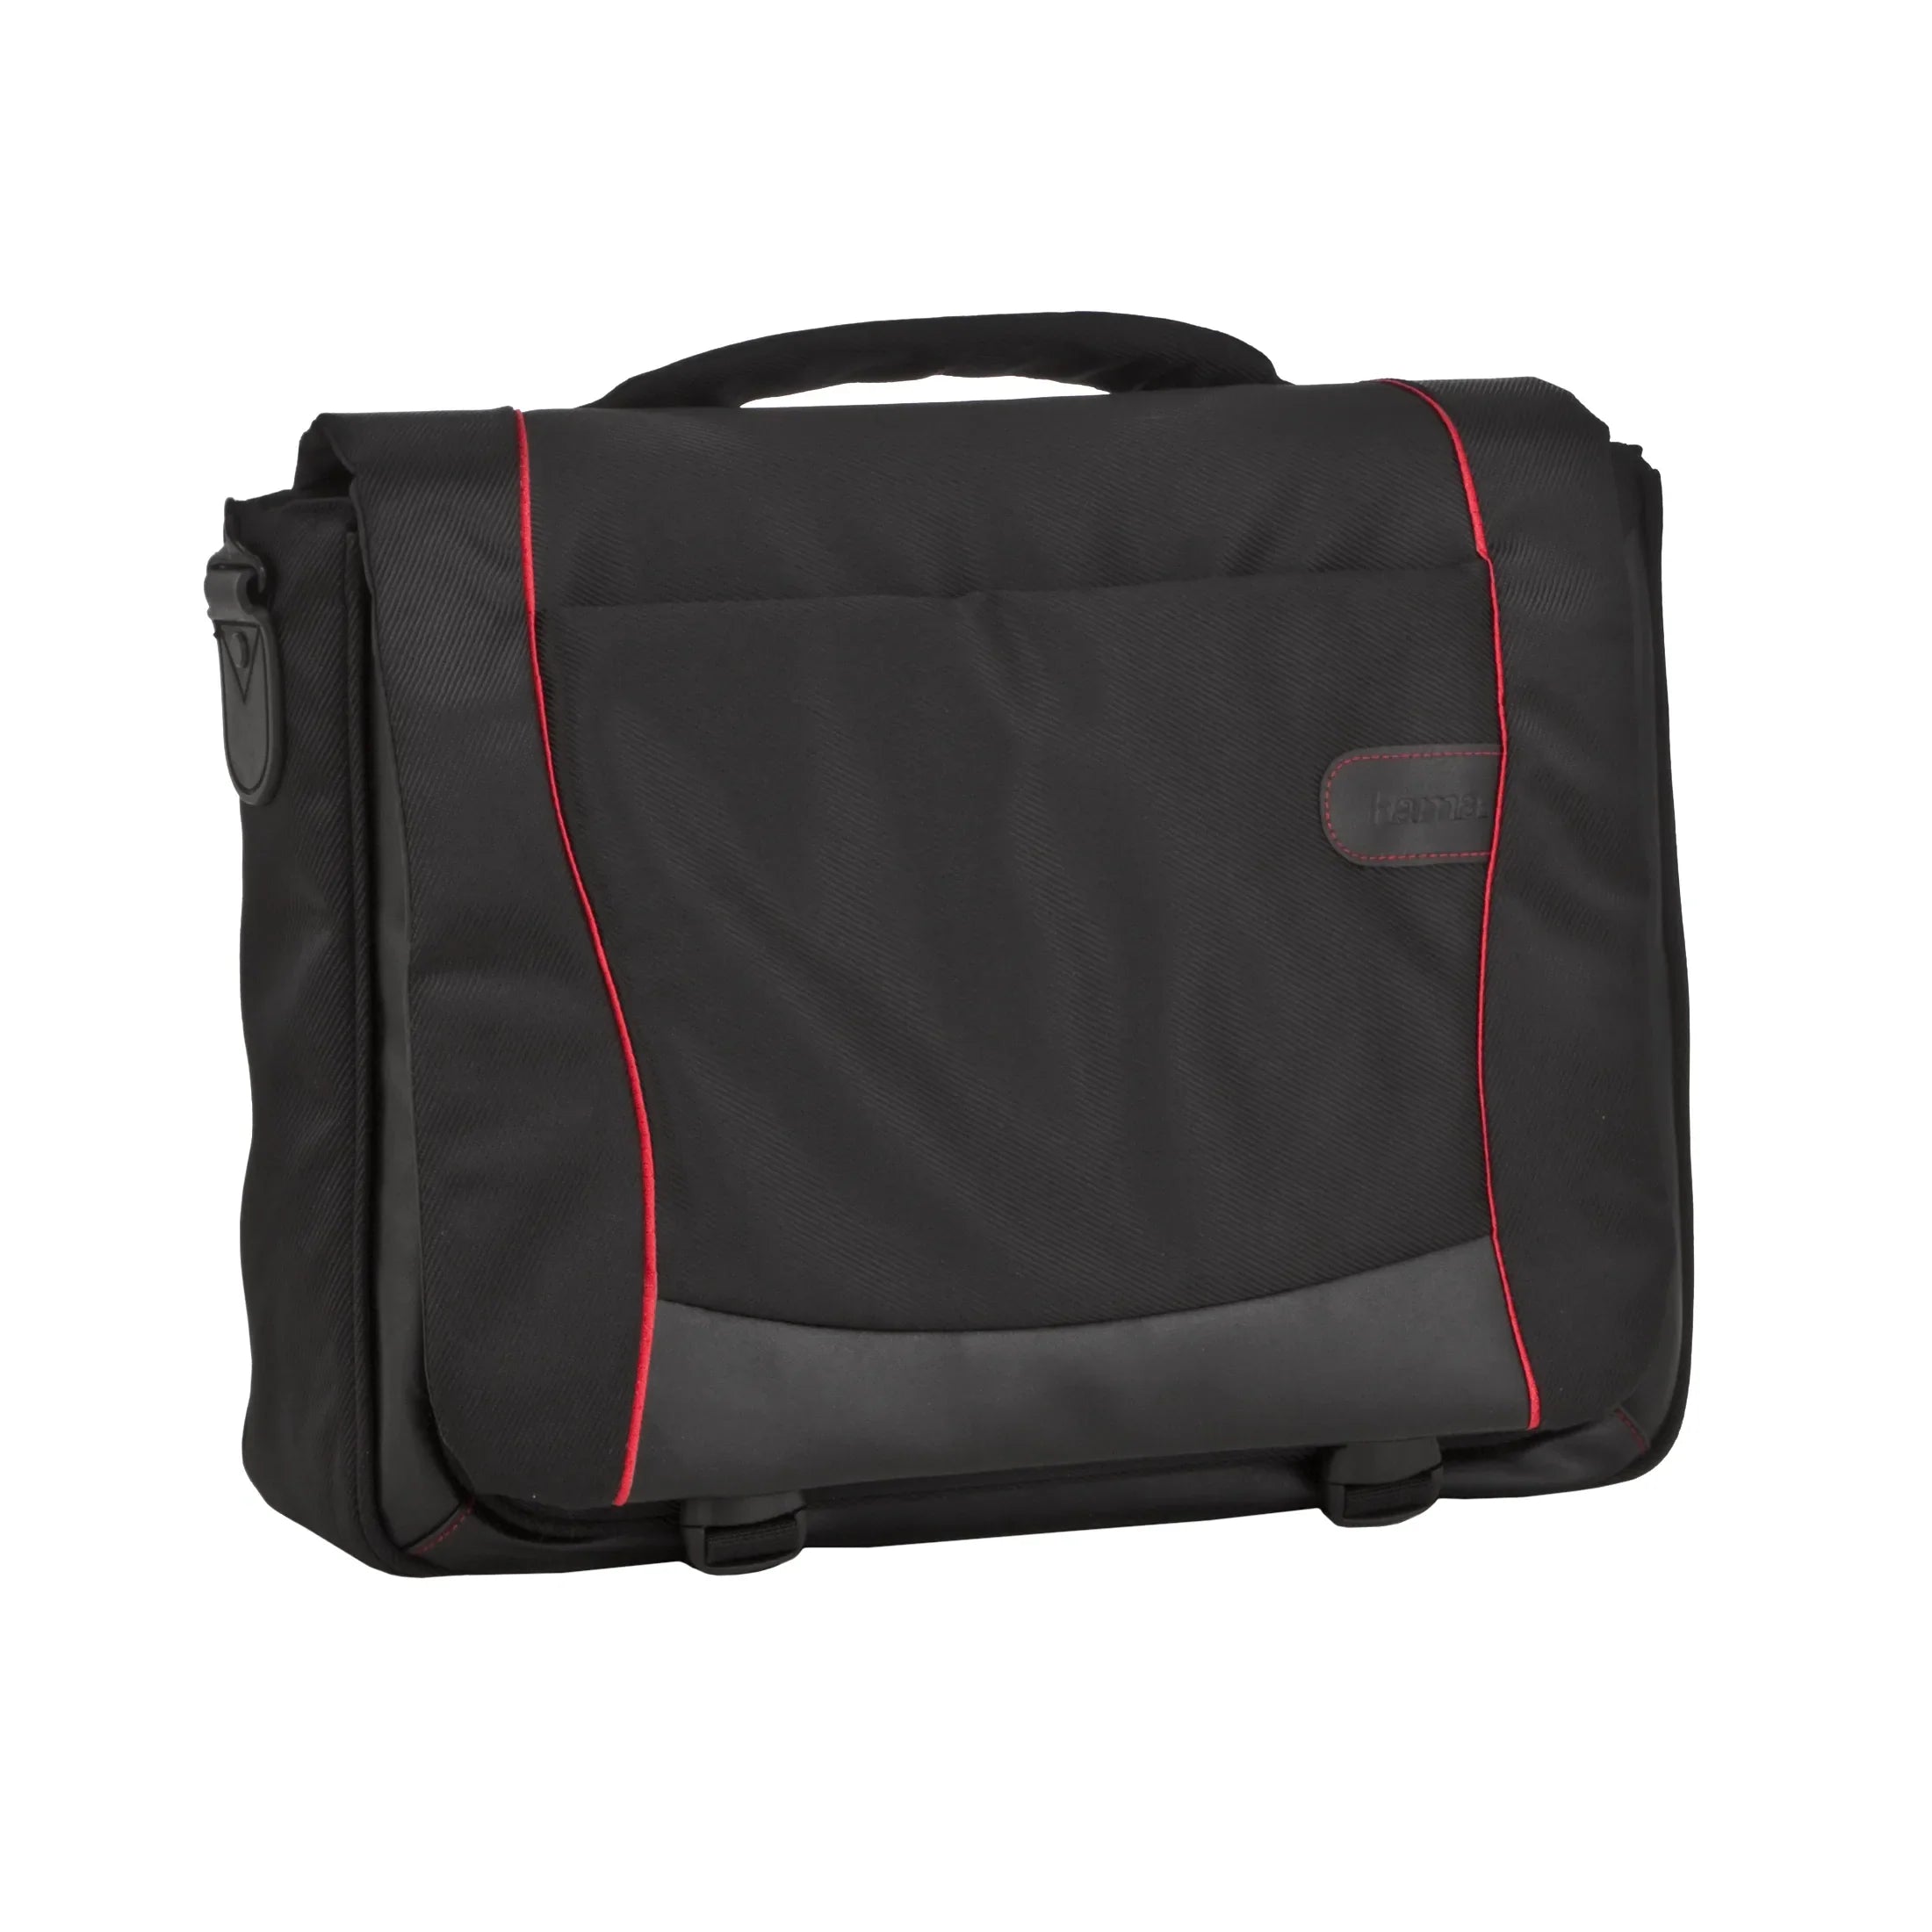 Hama Sportsline Freedom Messenger Bag with laptop compartment 39 cm - black